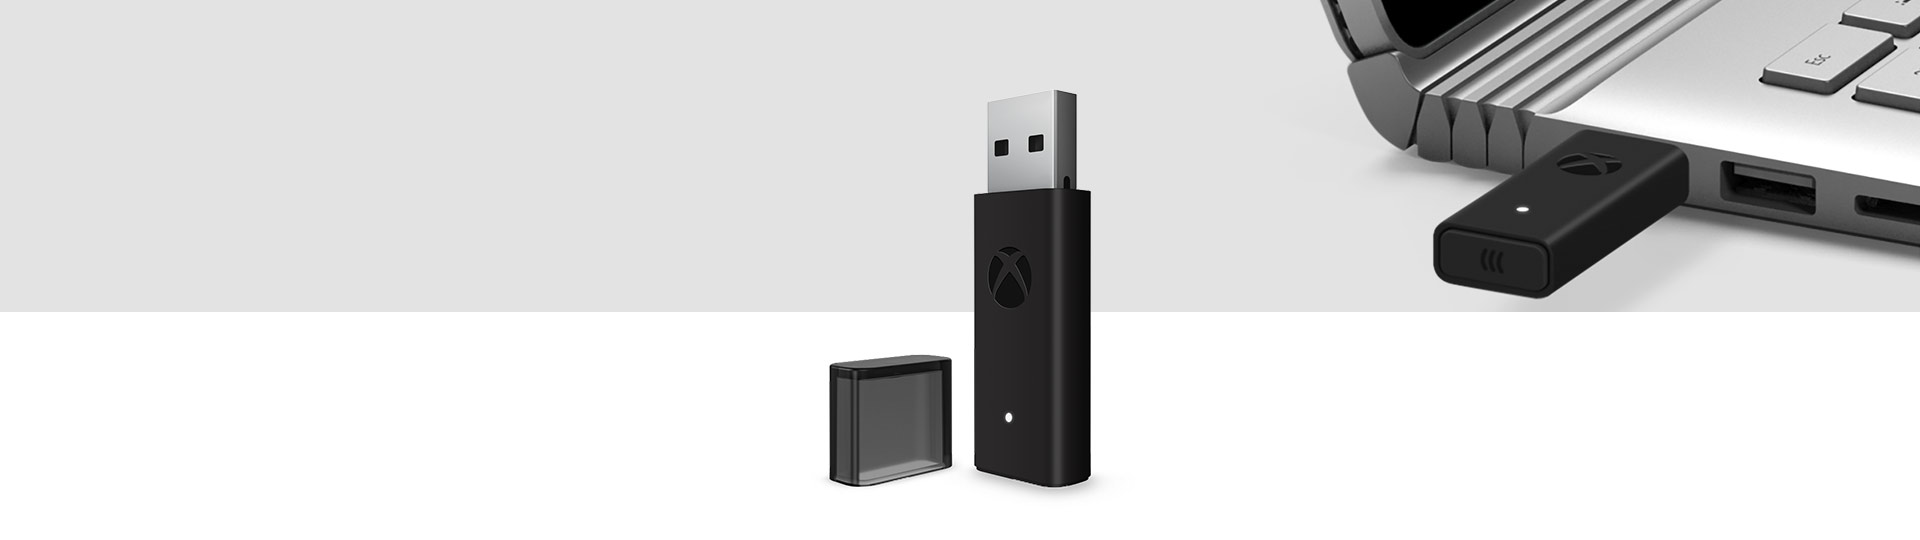 Xbox Wireless Adapter Windows 10 |